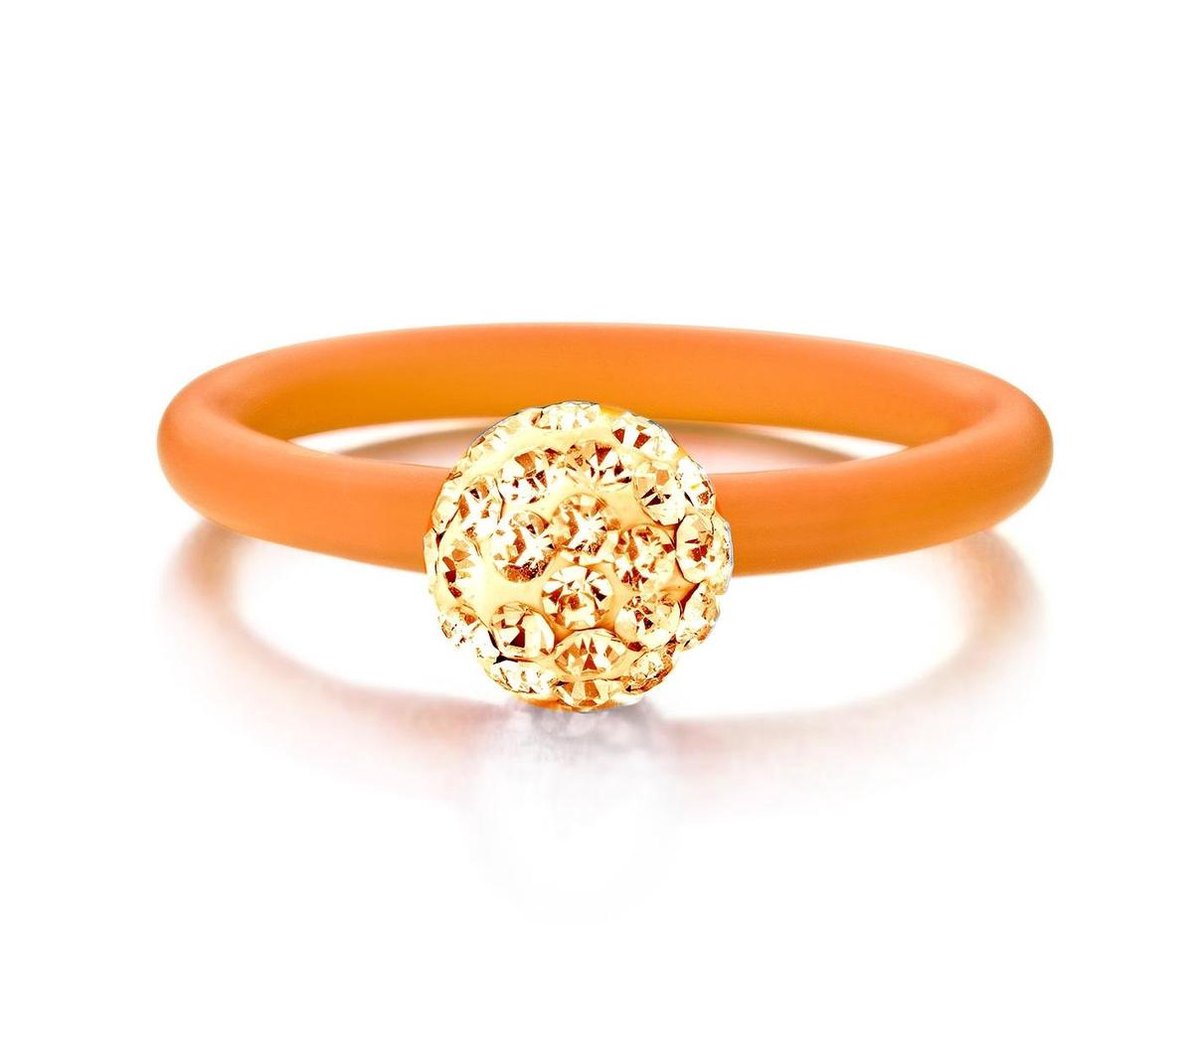 Colori 4 RNG00085 Siliconen Ring met Steen - Kristal Bal 8 mm - One-Size - Oranje